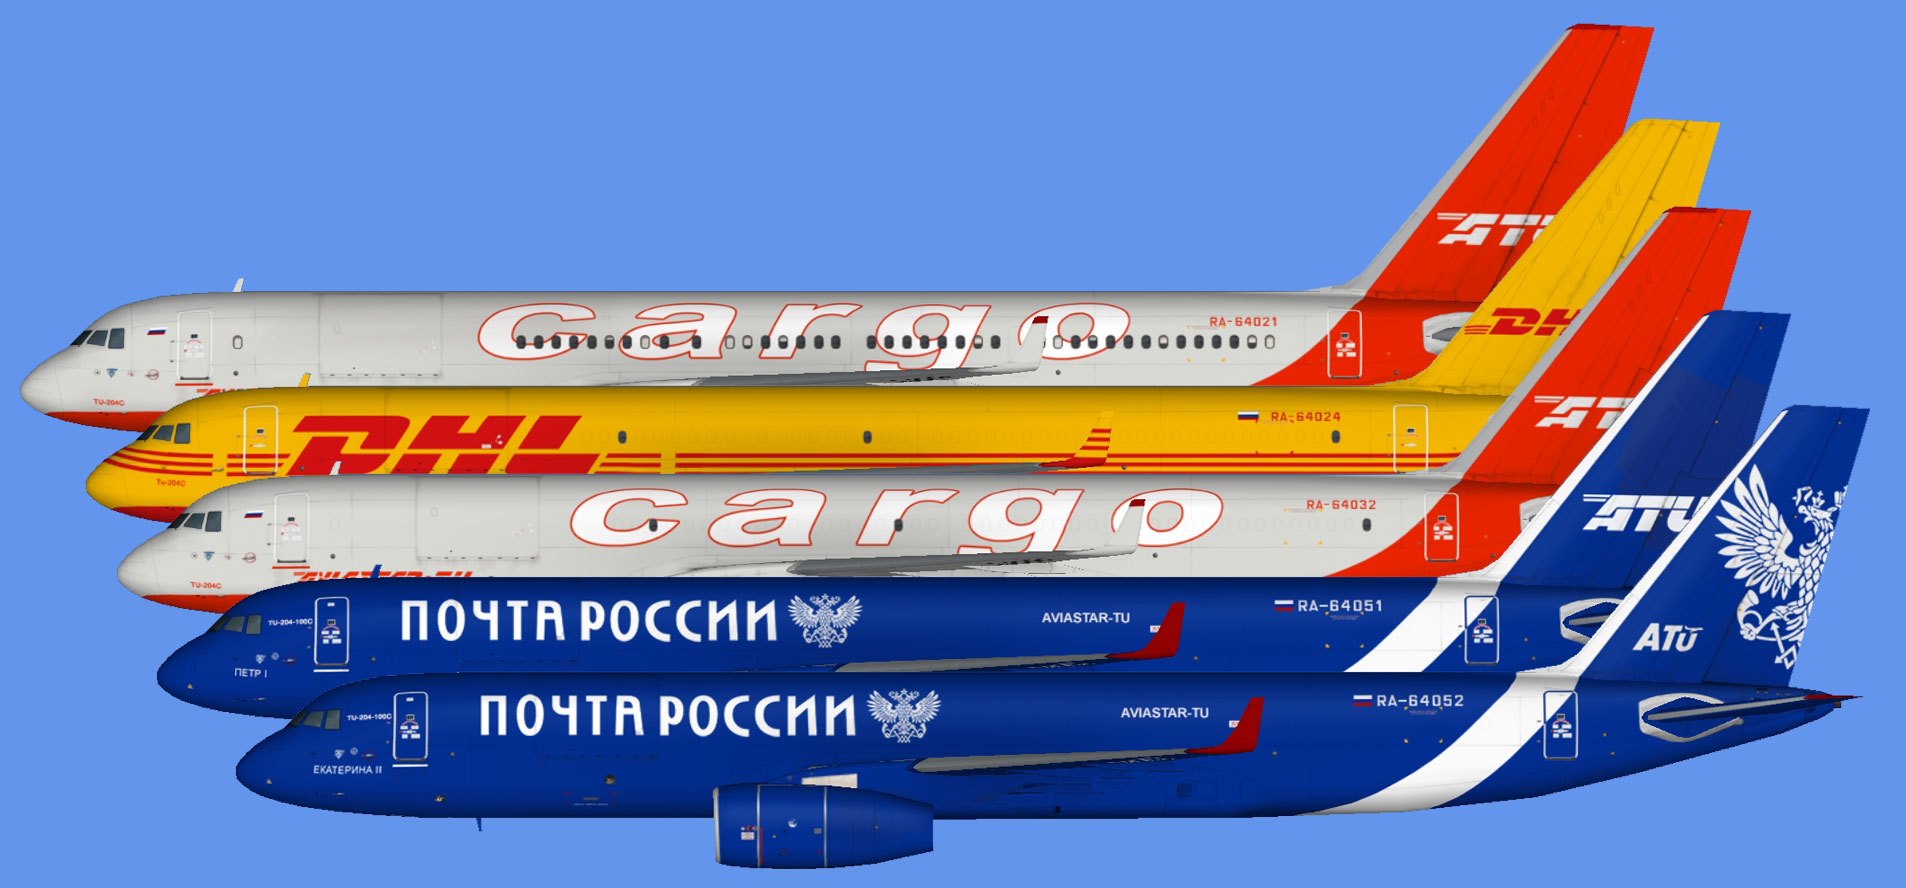 Aviastar-TU Tupolev Tu-204